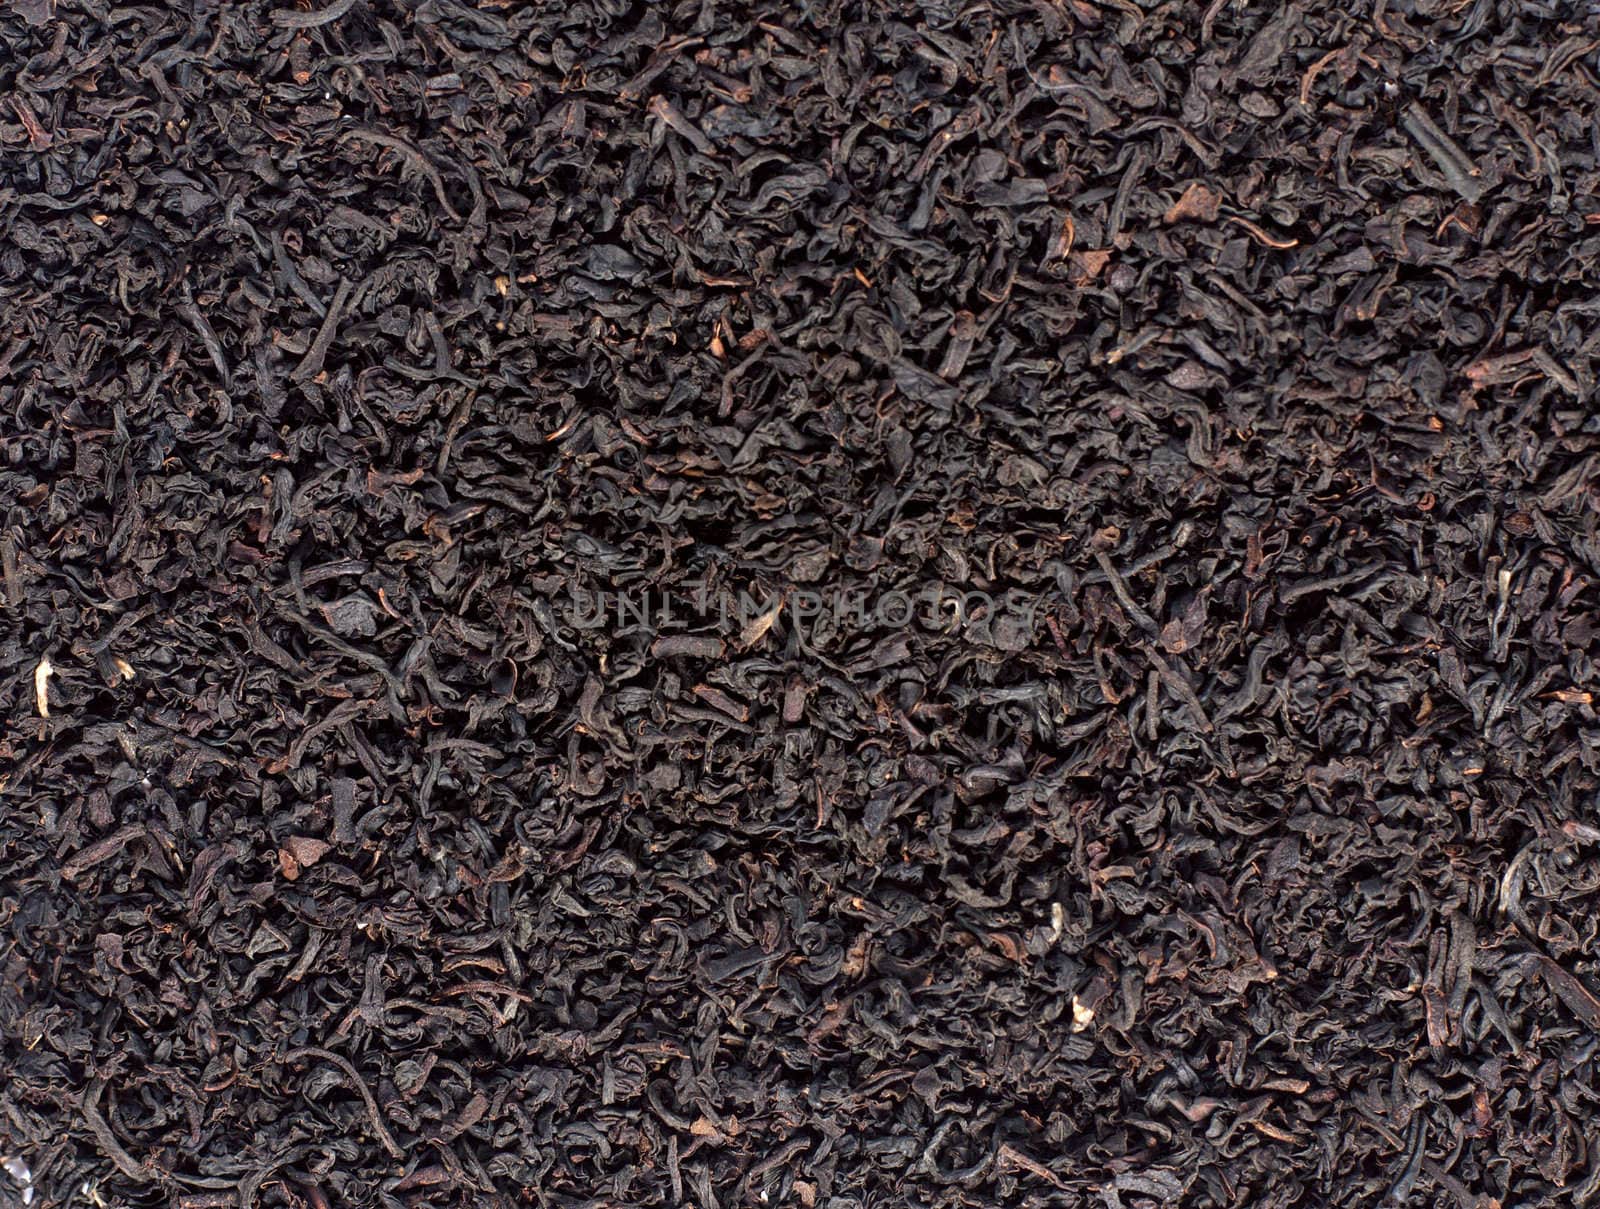 Black tea as a texture